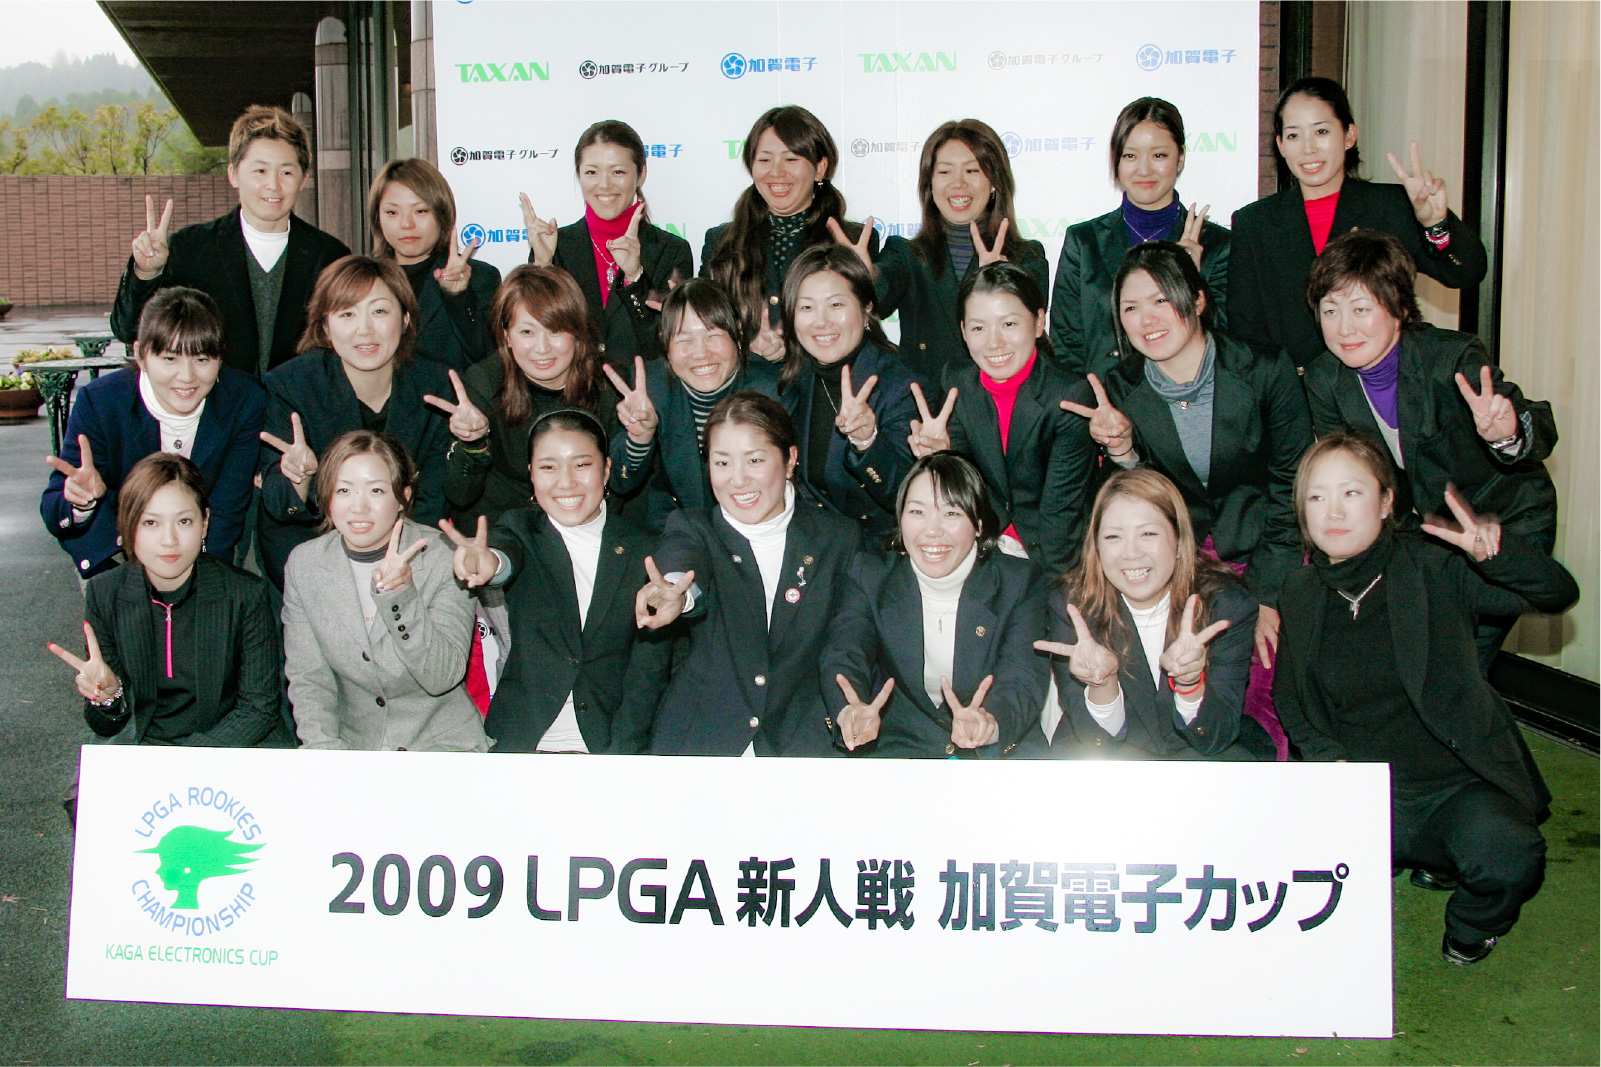 2009 LPGA 新人戦加賀電子カップ